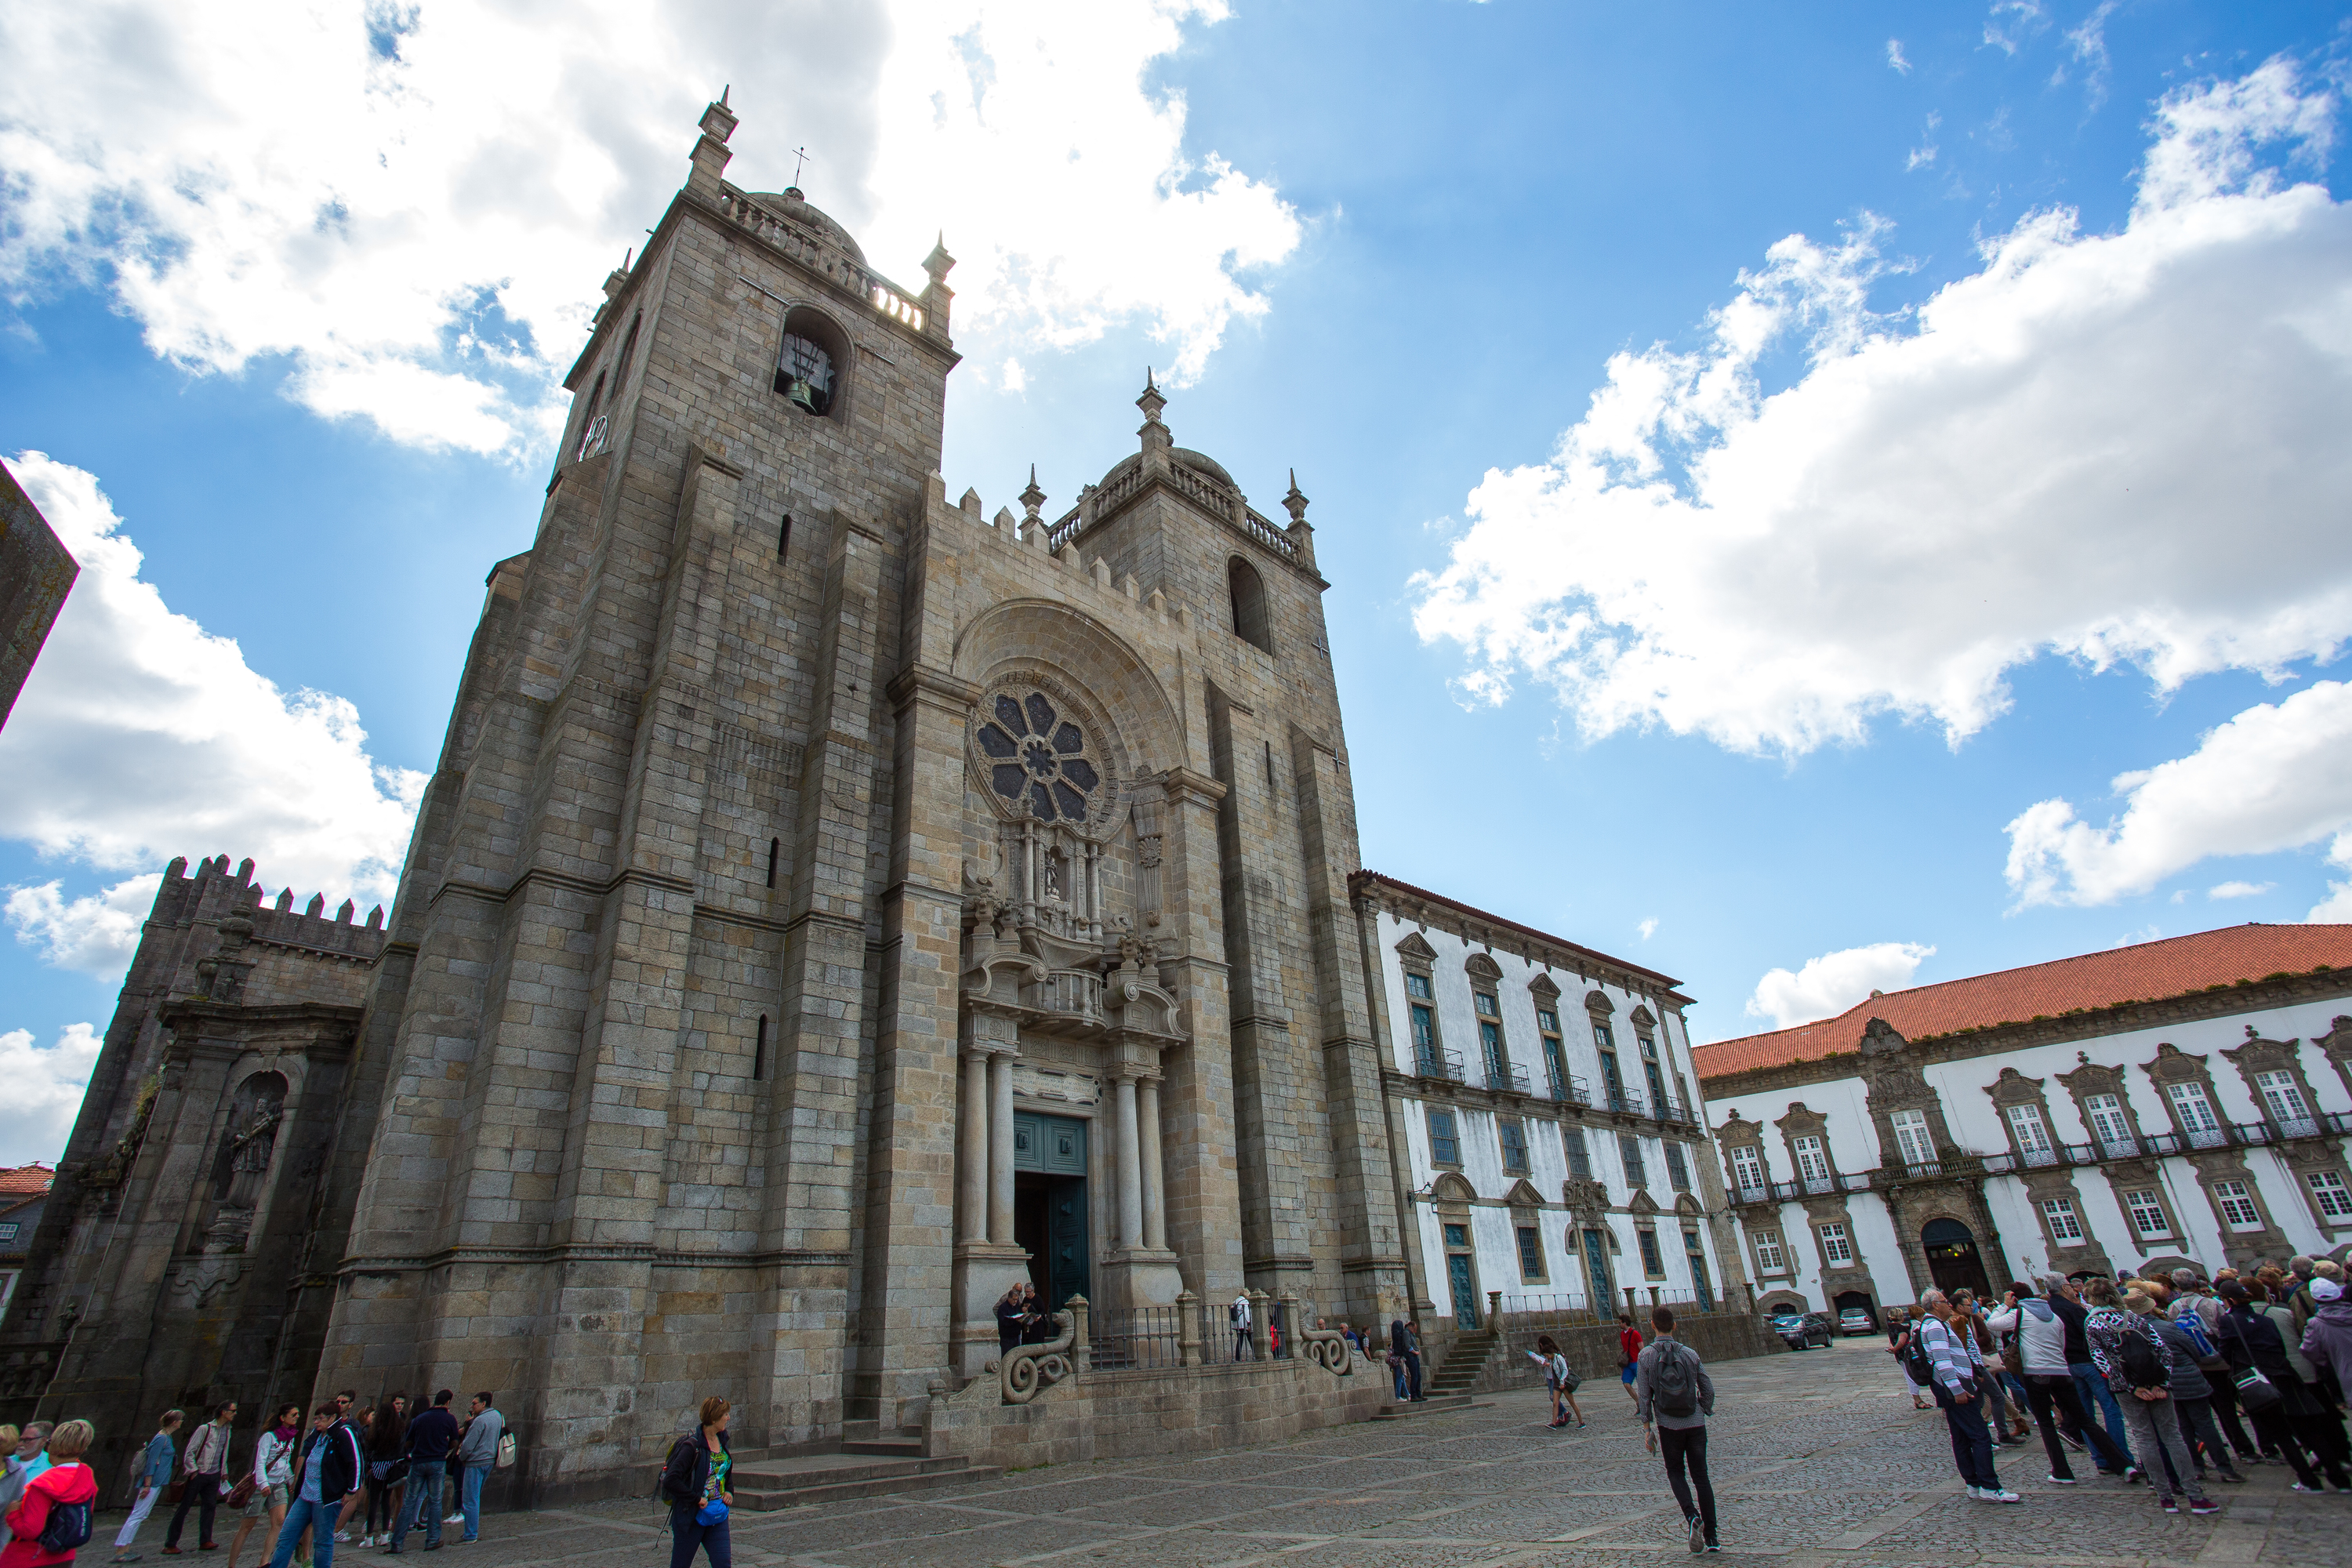 Sé Catedral | Attractions in Sé, Porto